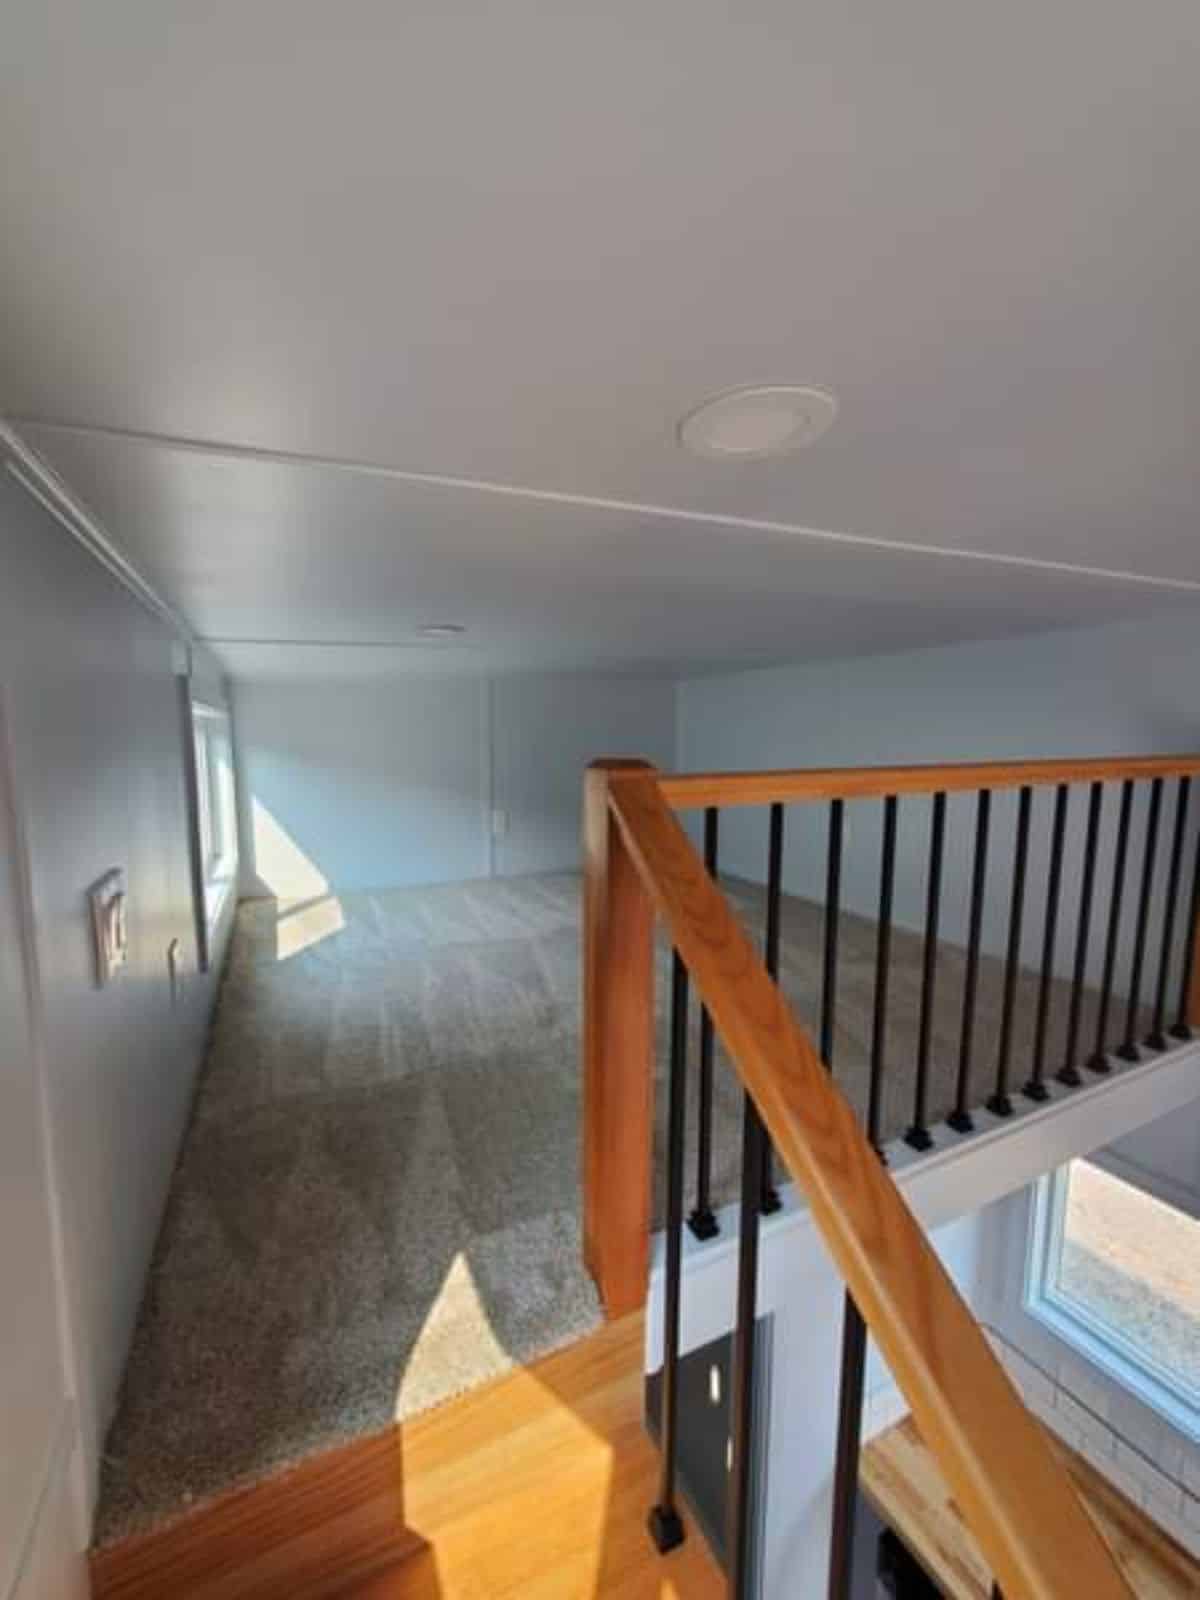 Loft bedroom of Brand-New Tiny Home